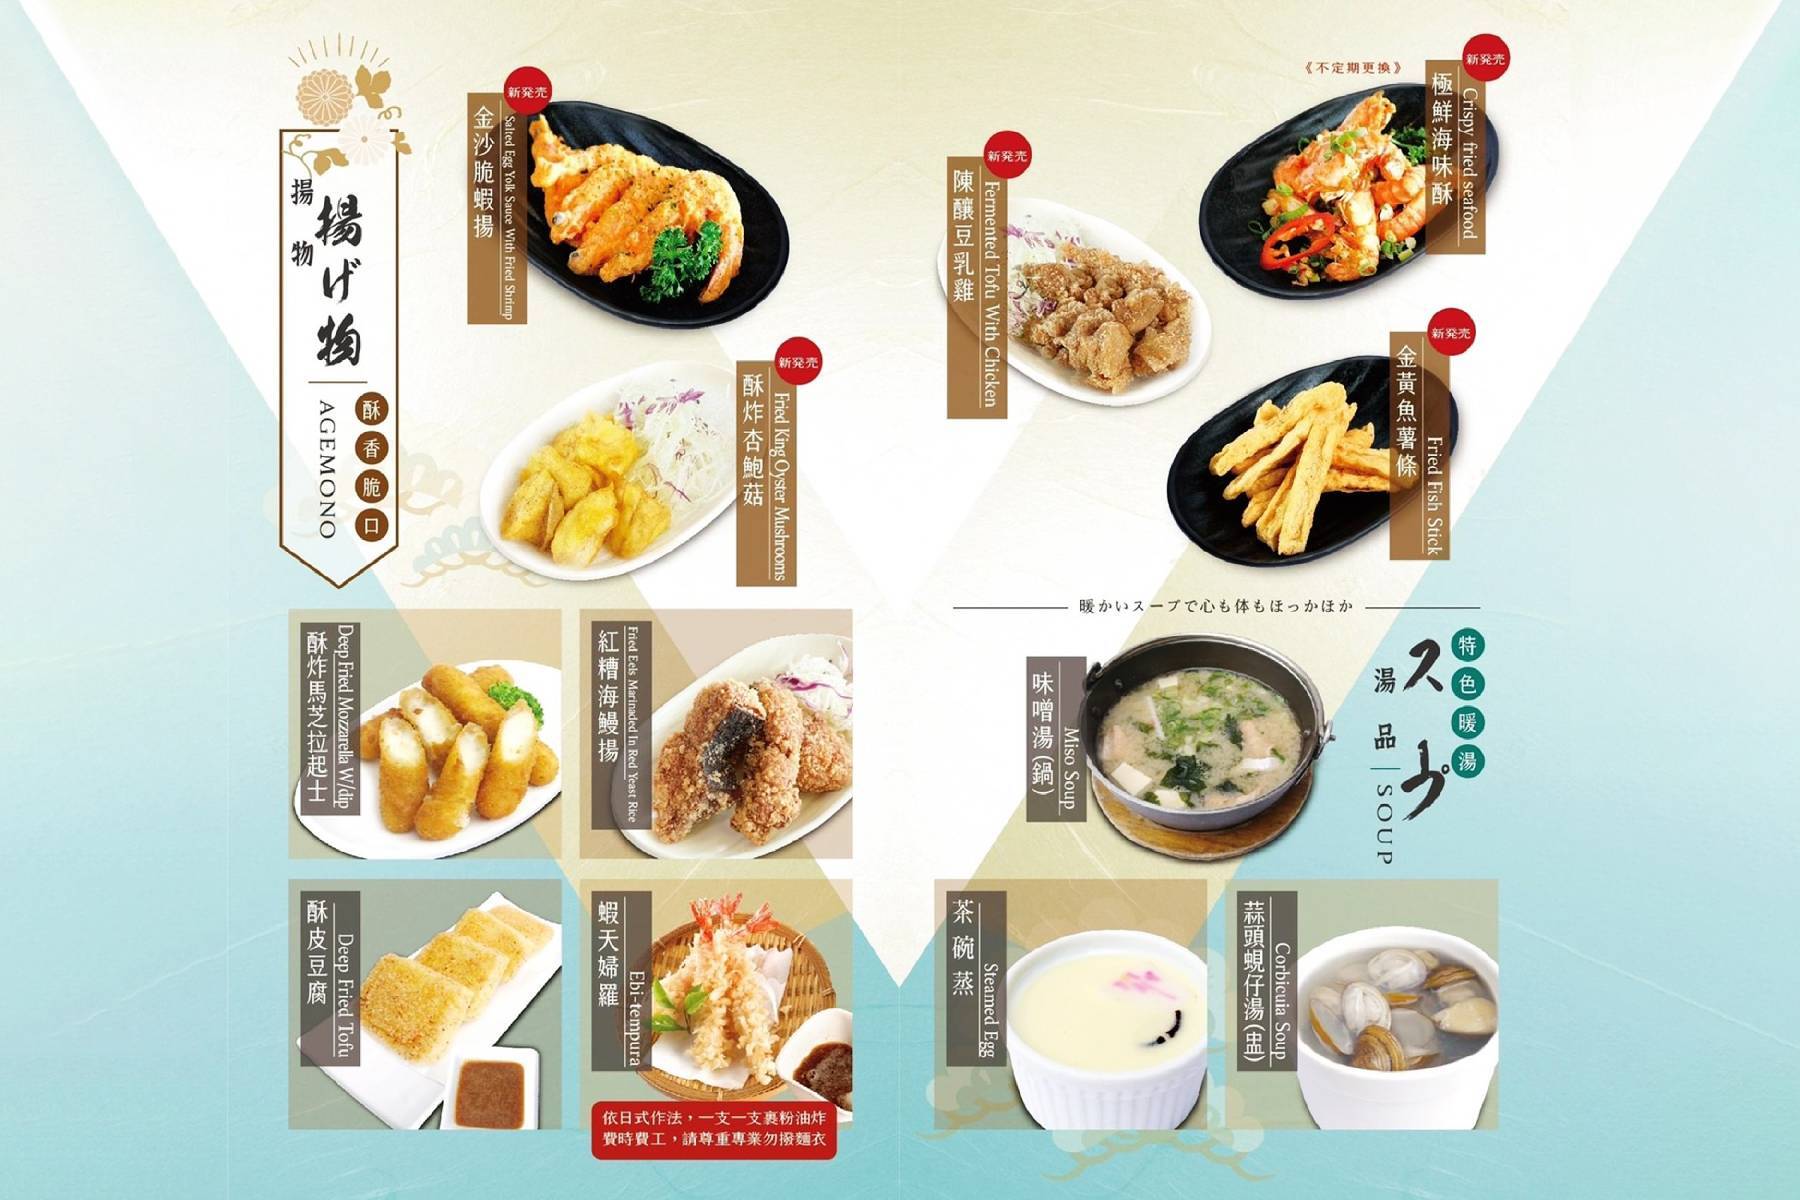 ●Soto日式精緻料理-平日午餐A餐吃到飽10